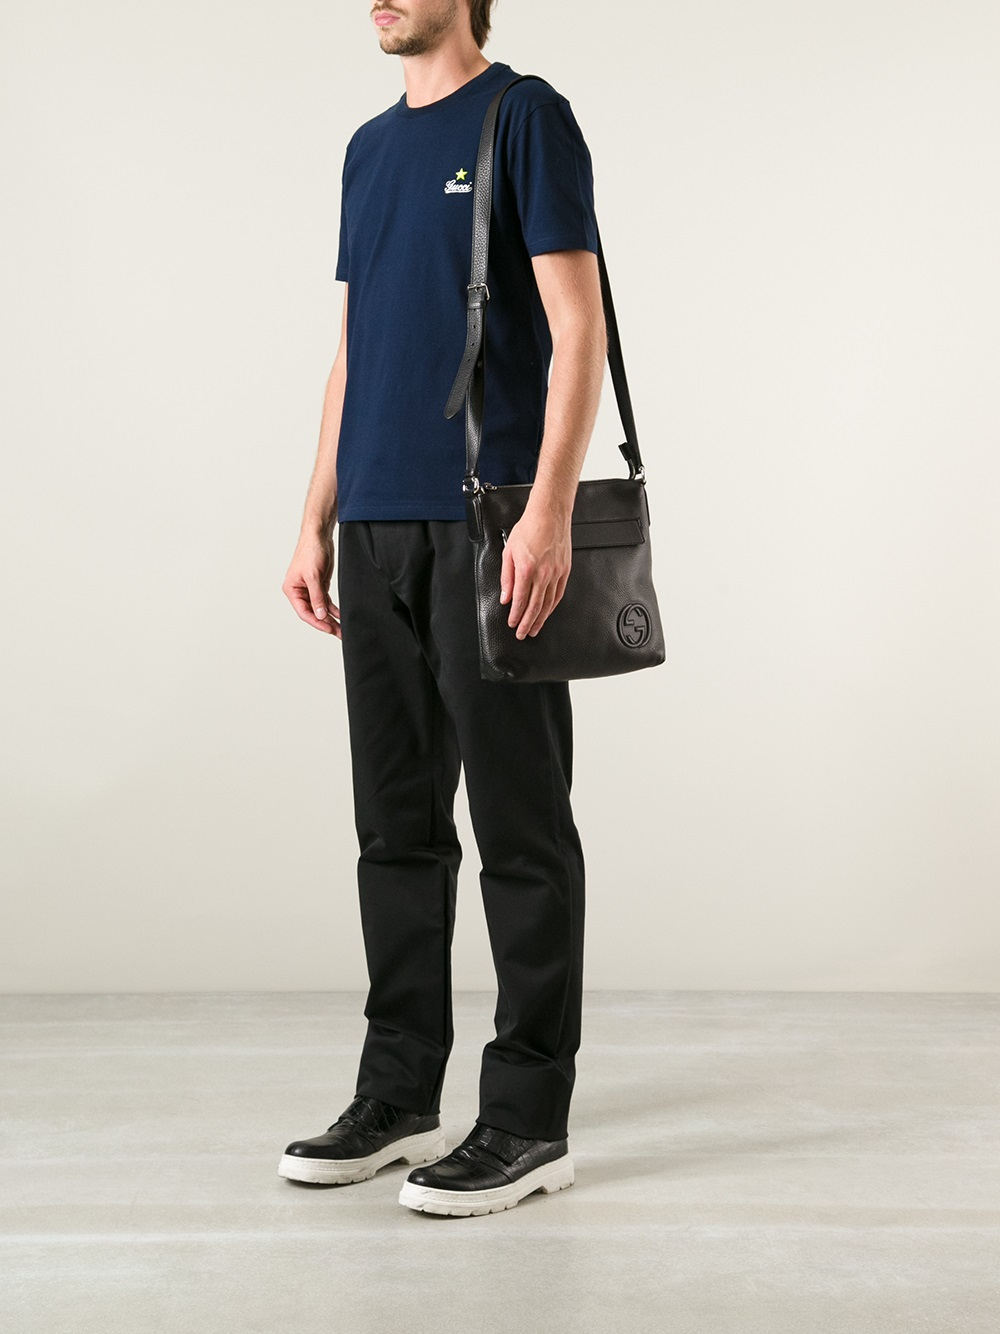 Lyst - Gucci Small Square Shoulder Bag in Black for Men